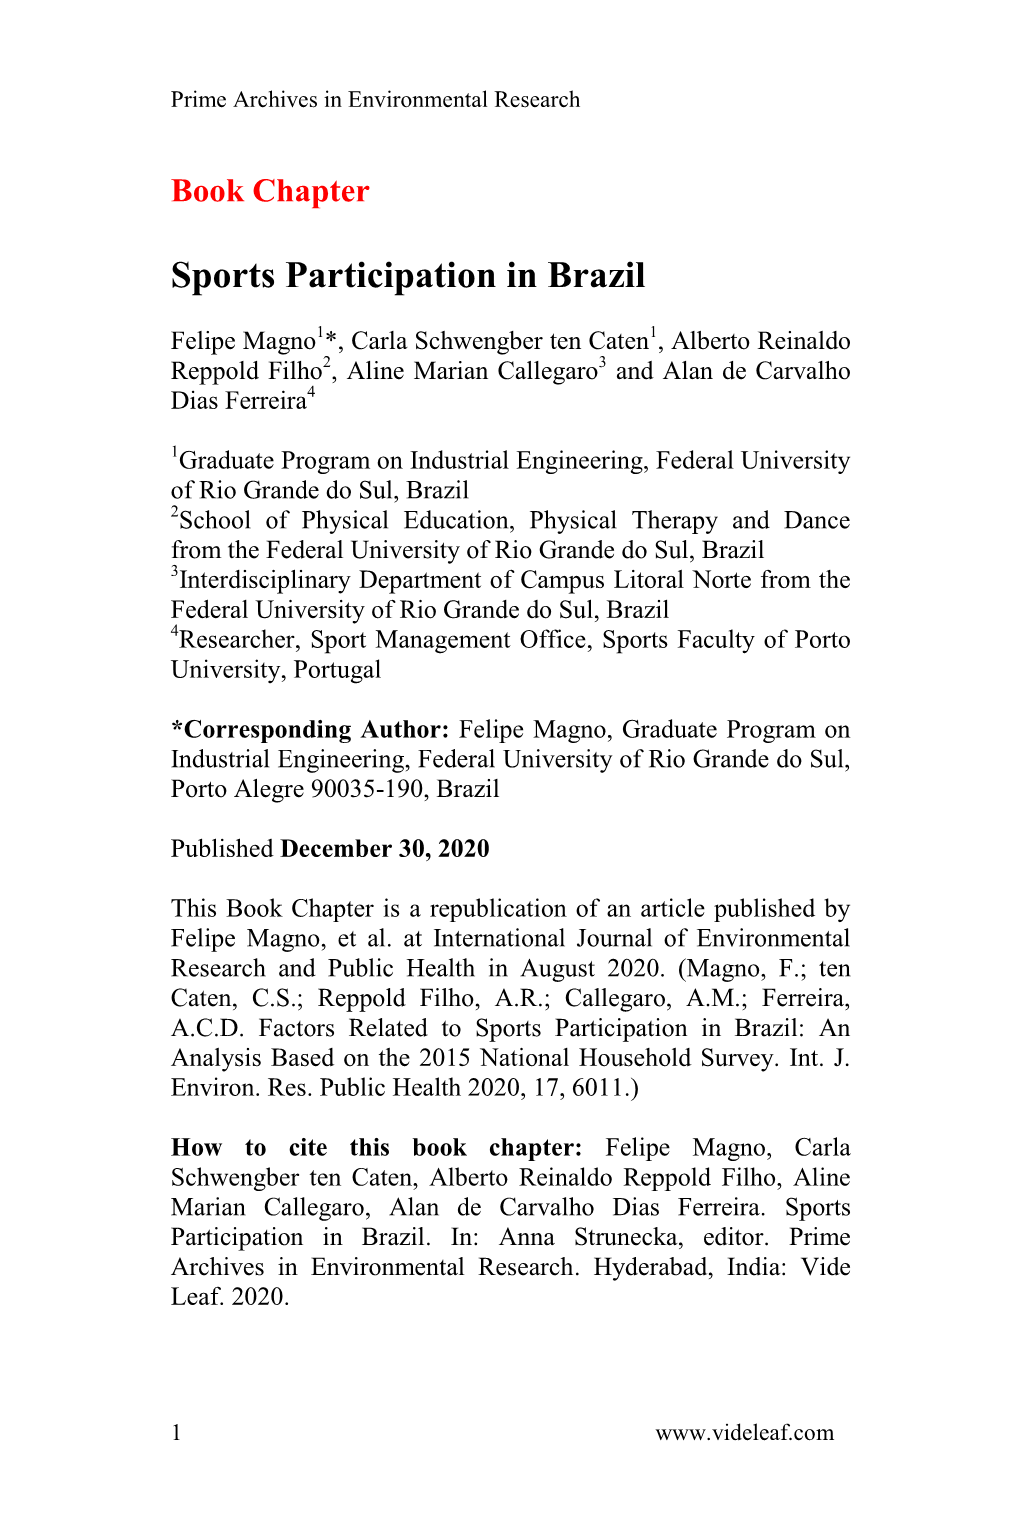 Sports Participation in Brazil